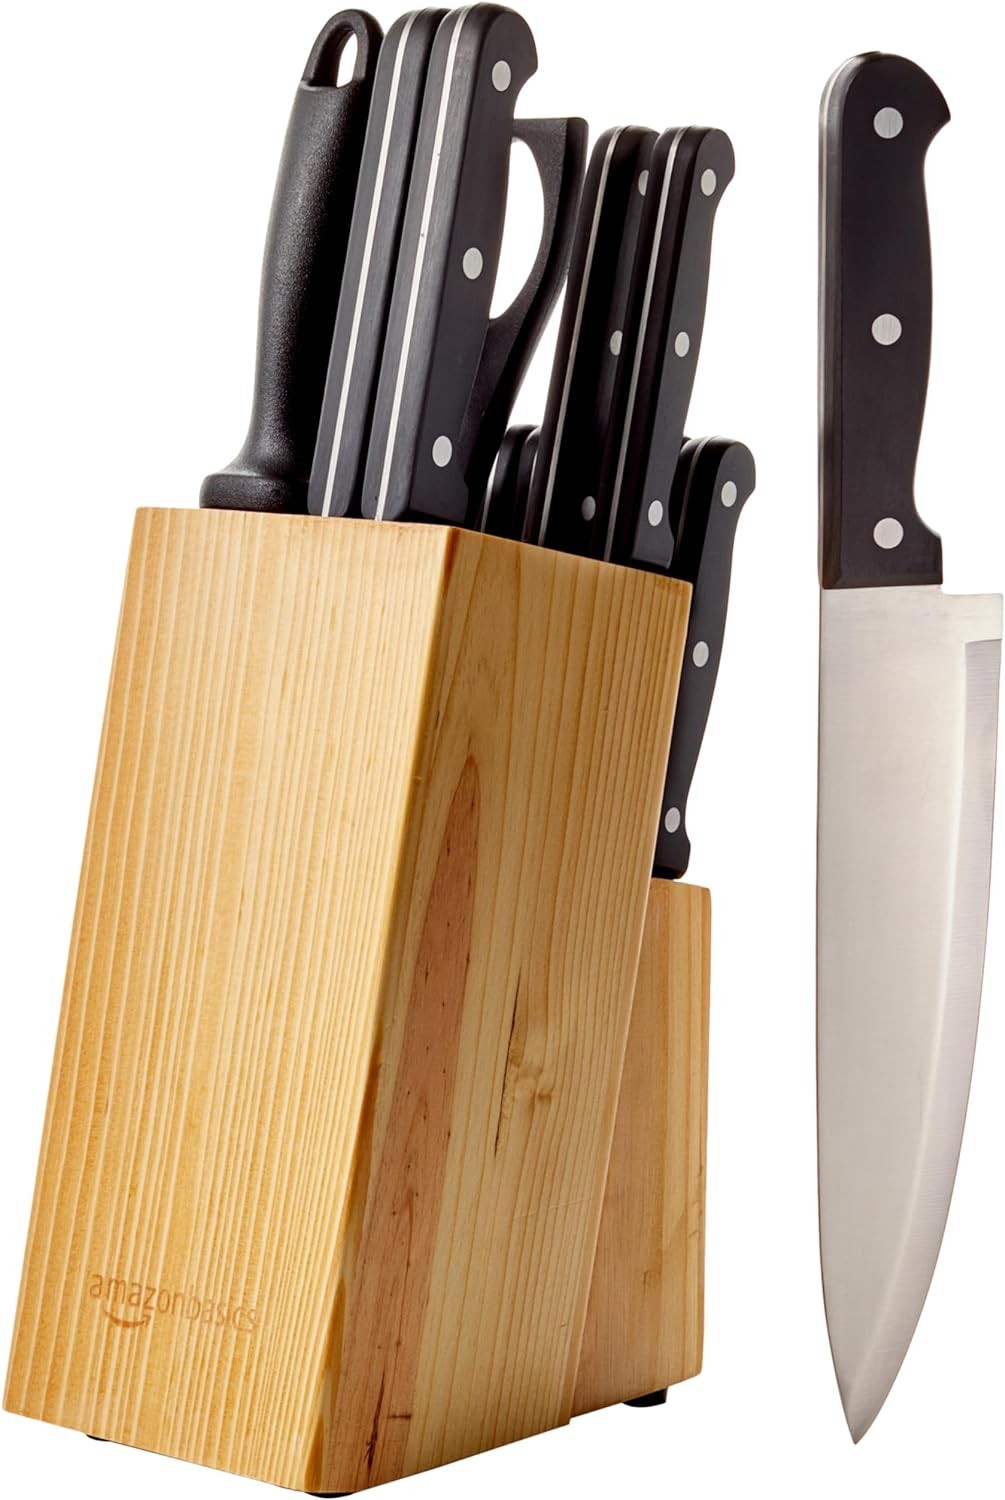 Basics 14-Piece Kitchen Knife Block Set